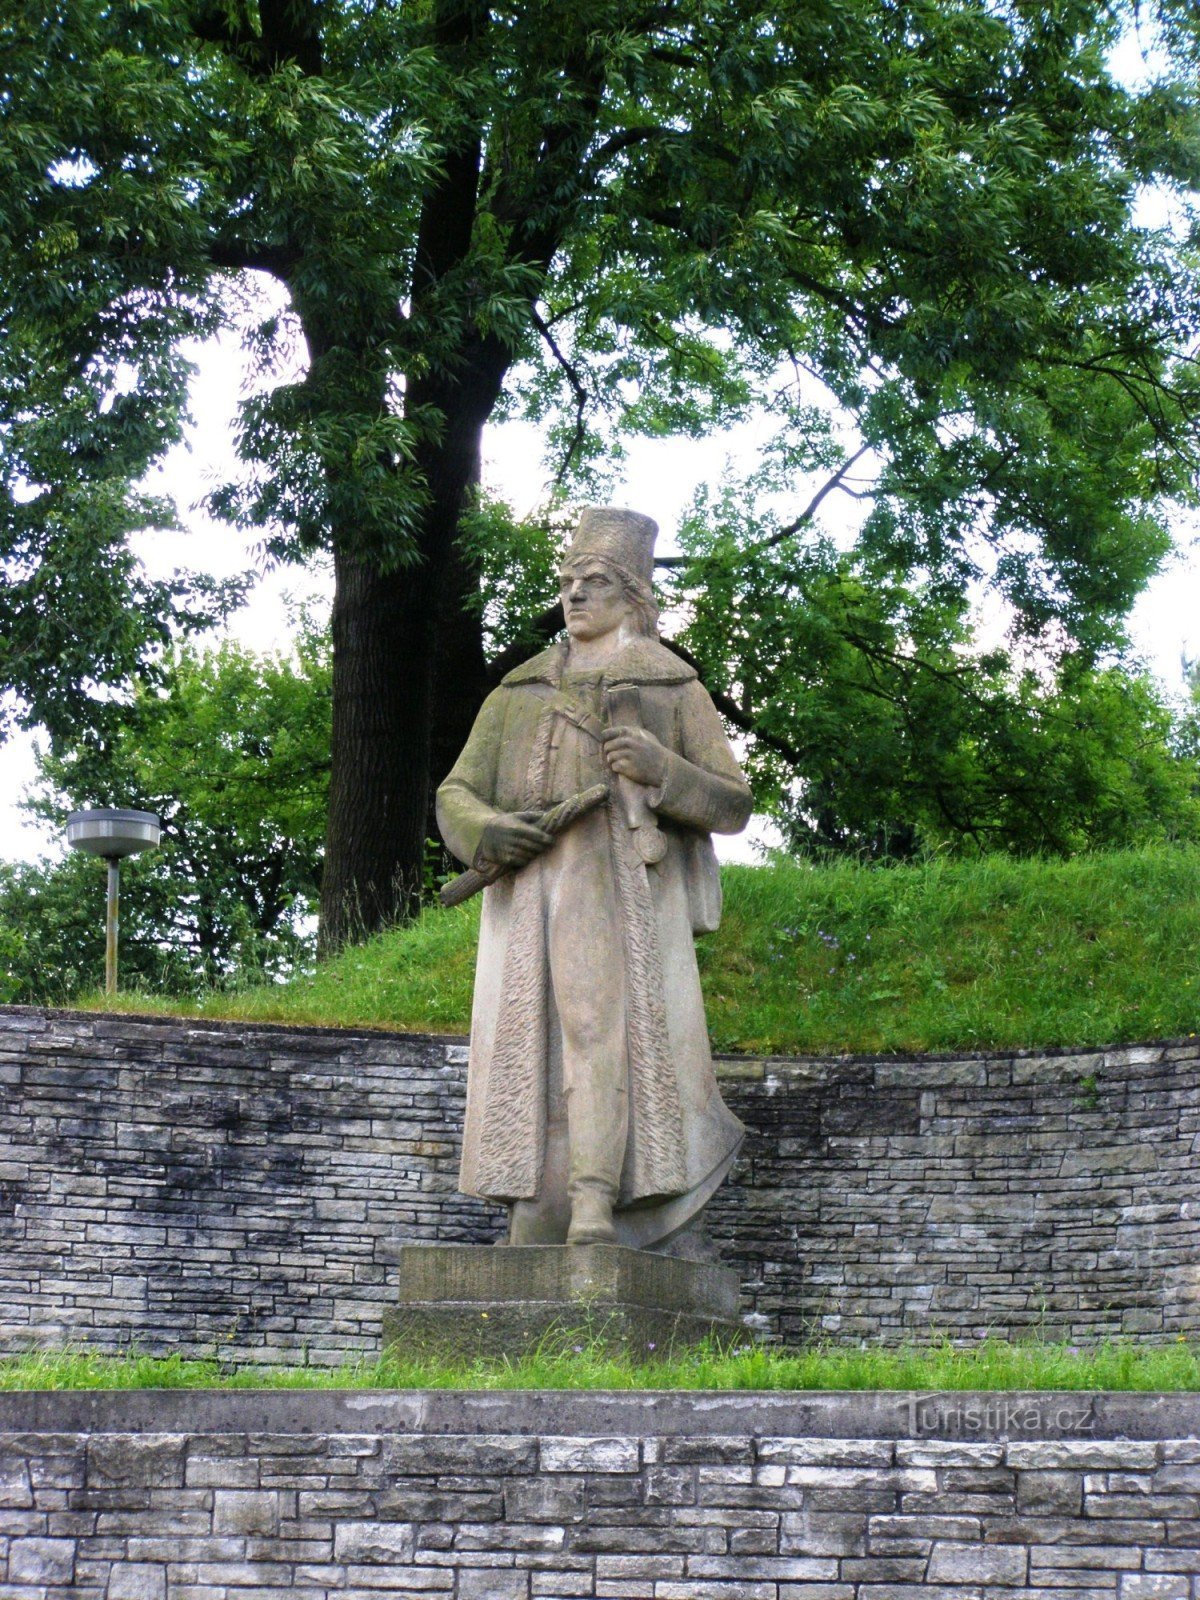 Rtyne in Podkrkonoší - standbeeld van de rebellen